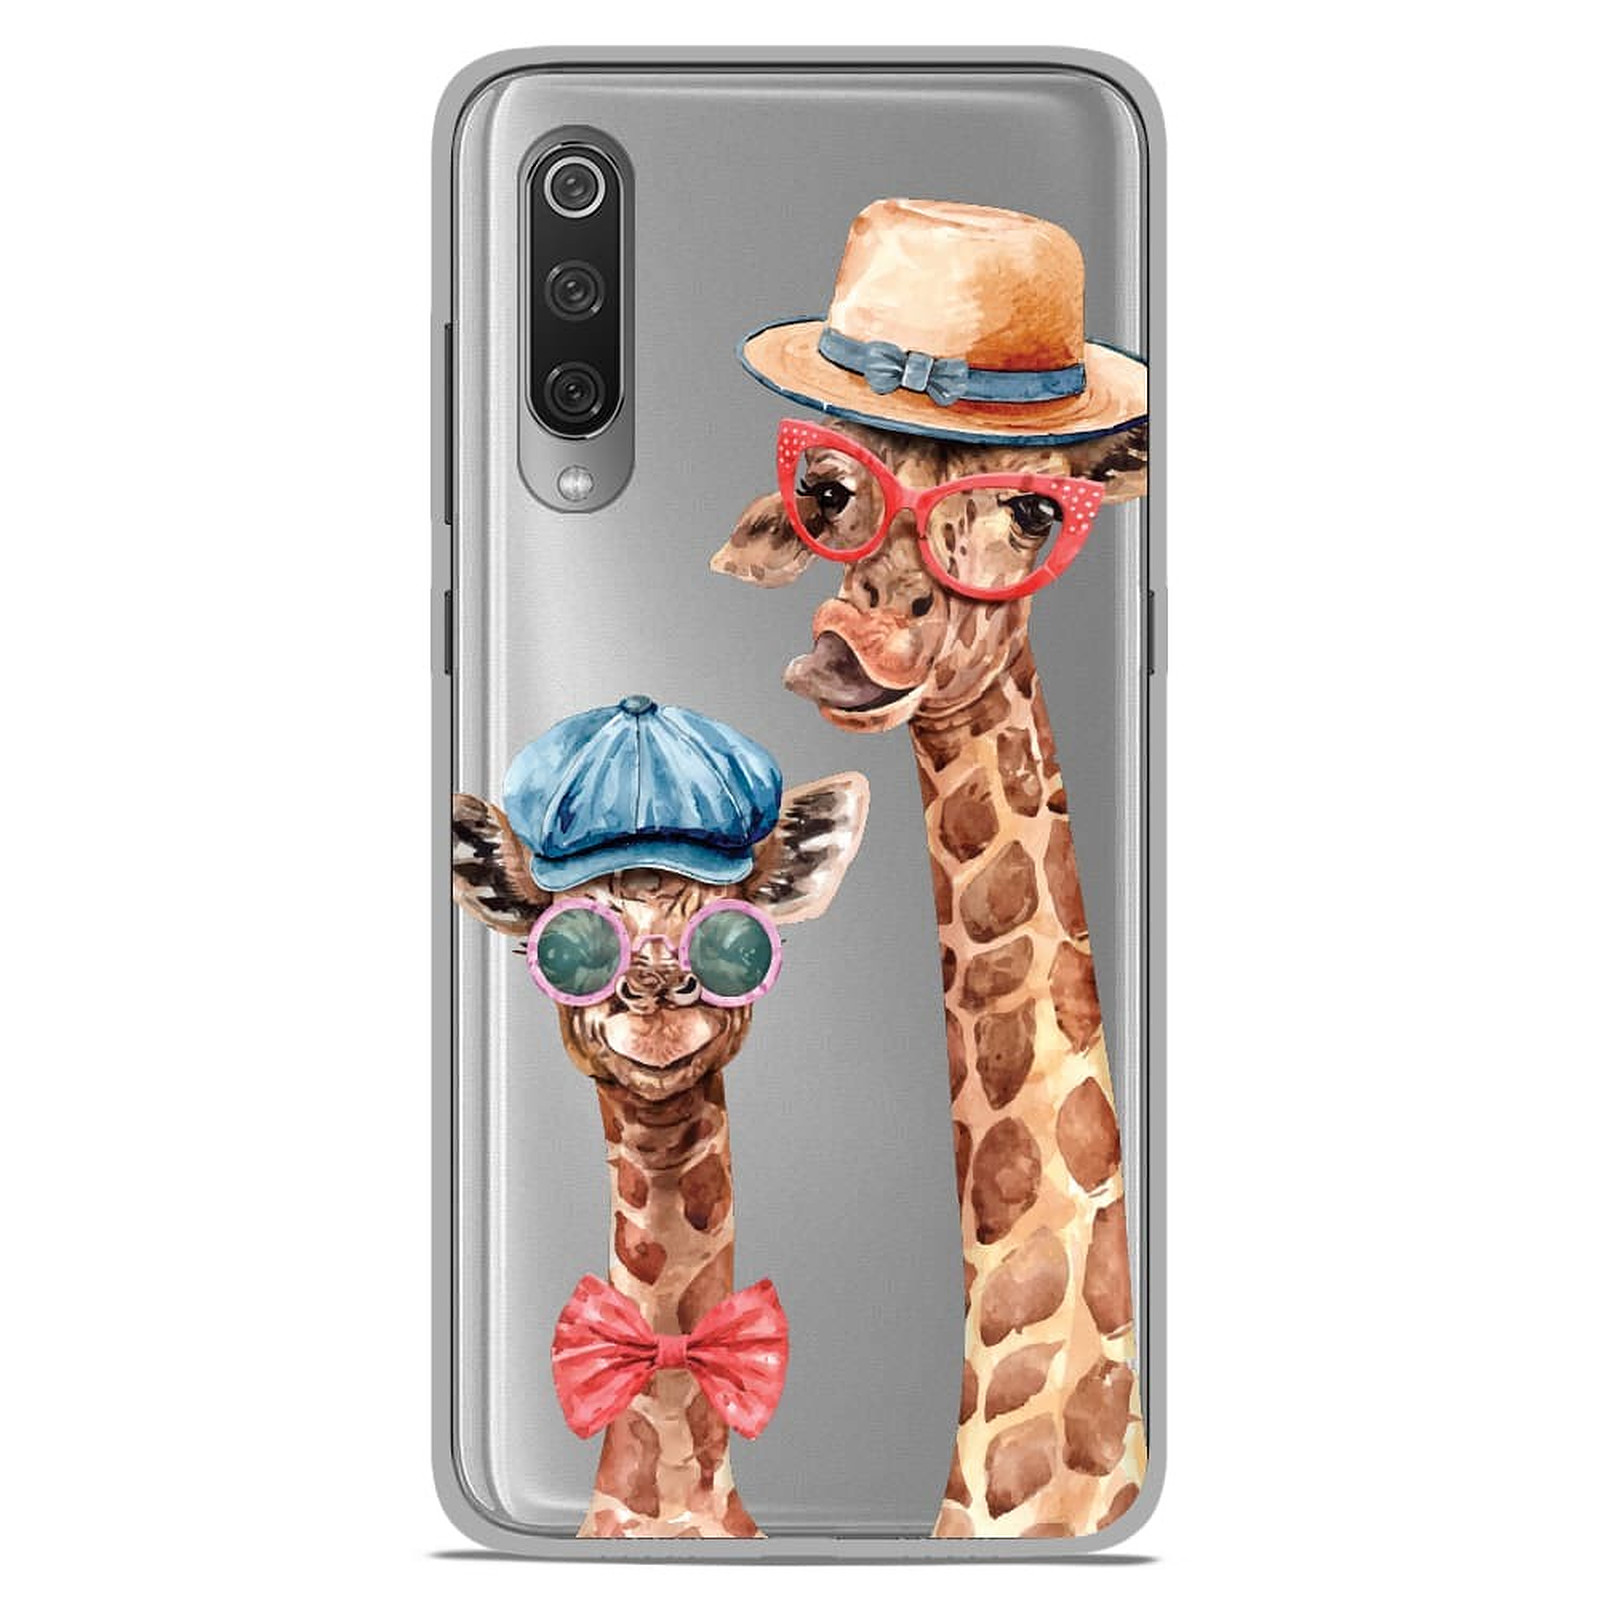 1001 Coques Coque silicone gel Xiaomi Mi 9 / Mi 9 Pro motif Funny Girafe - Coque telephone 1001Coques